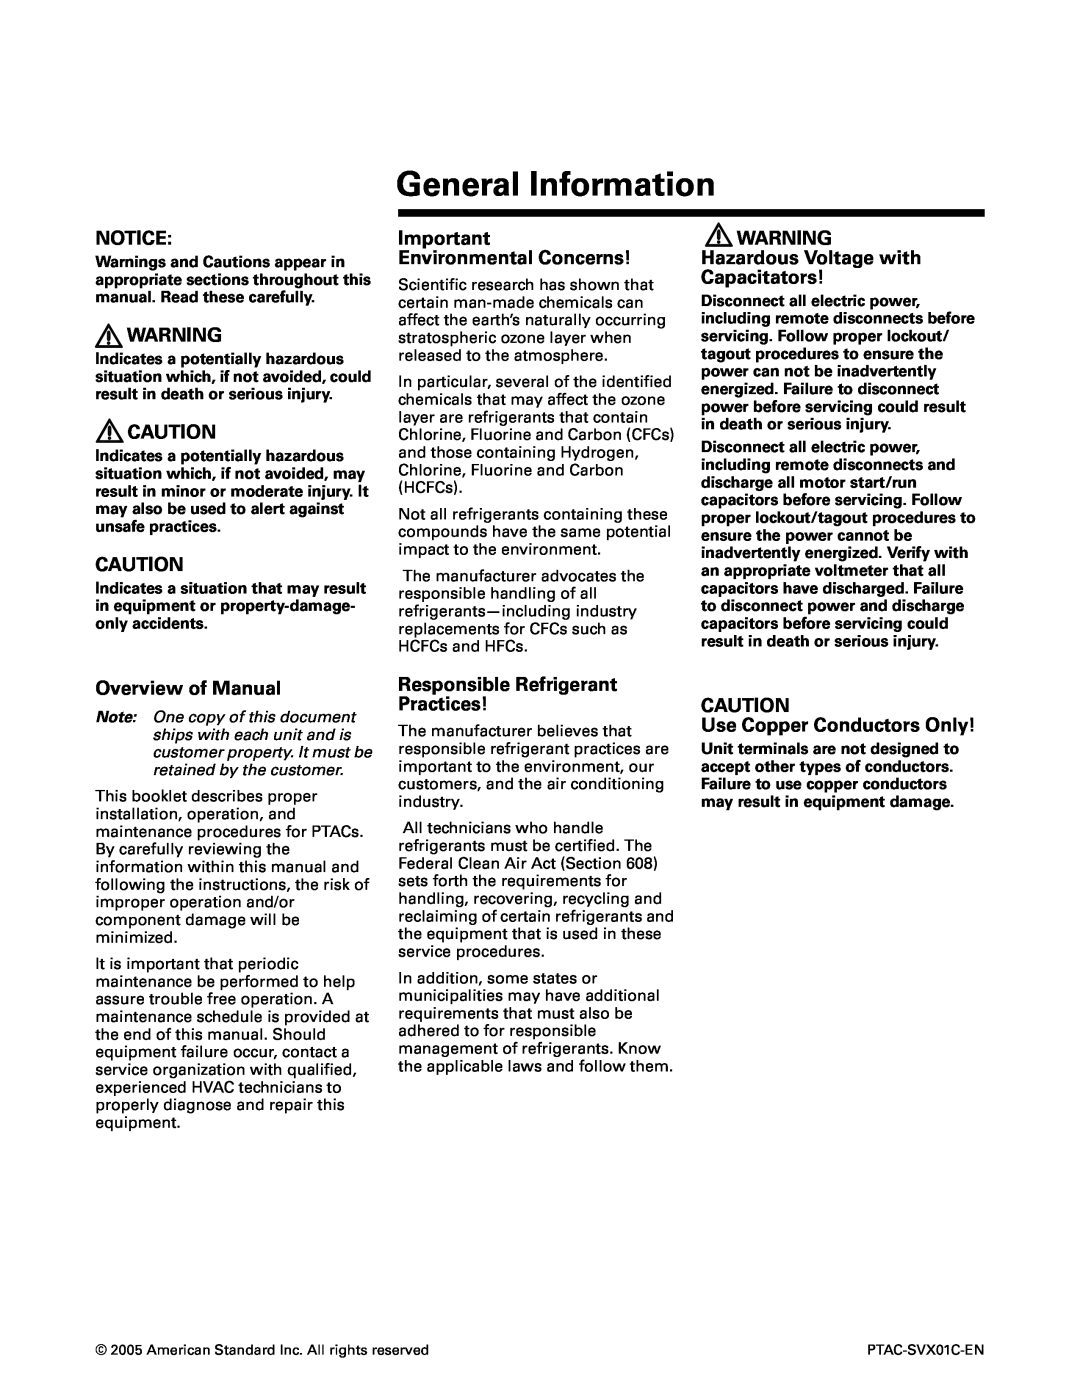 Trane PTAC-SVX01C-EN manual General Information, Notice, Important Environmental Concerns, Overview of Manual 